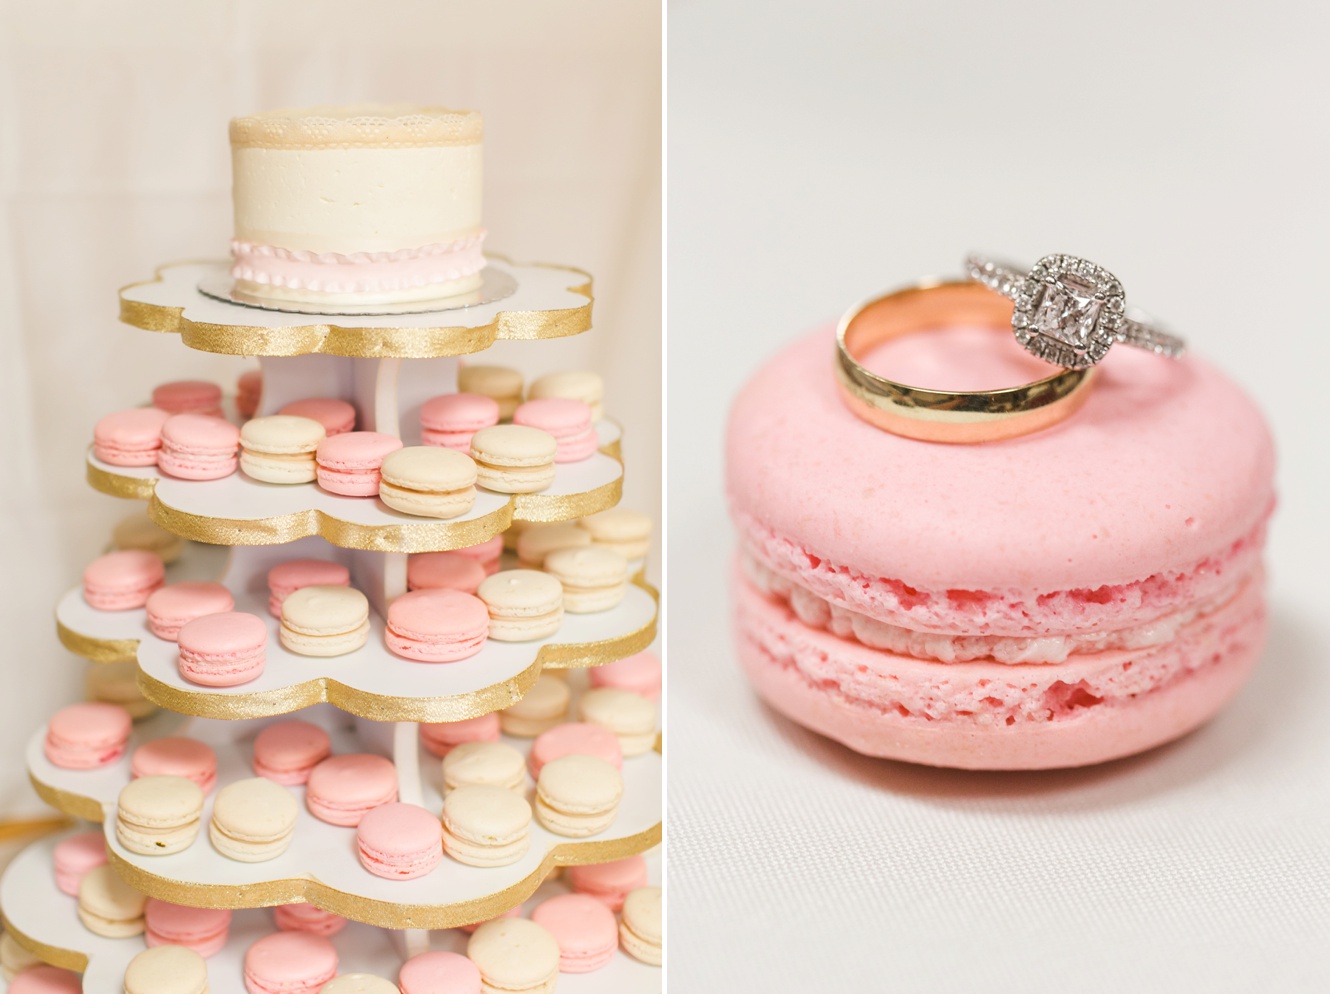 Le Macaron wedding cake and diamond ring photo